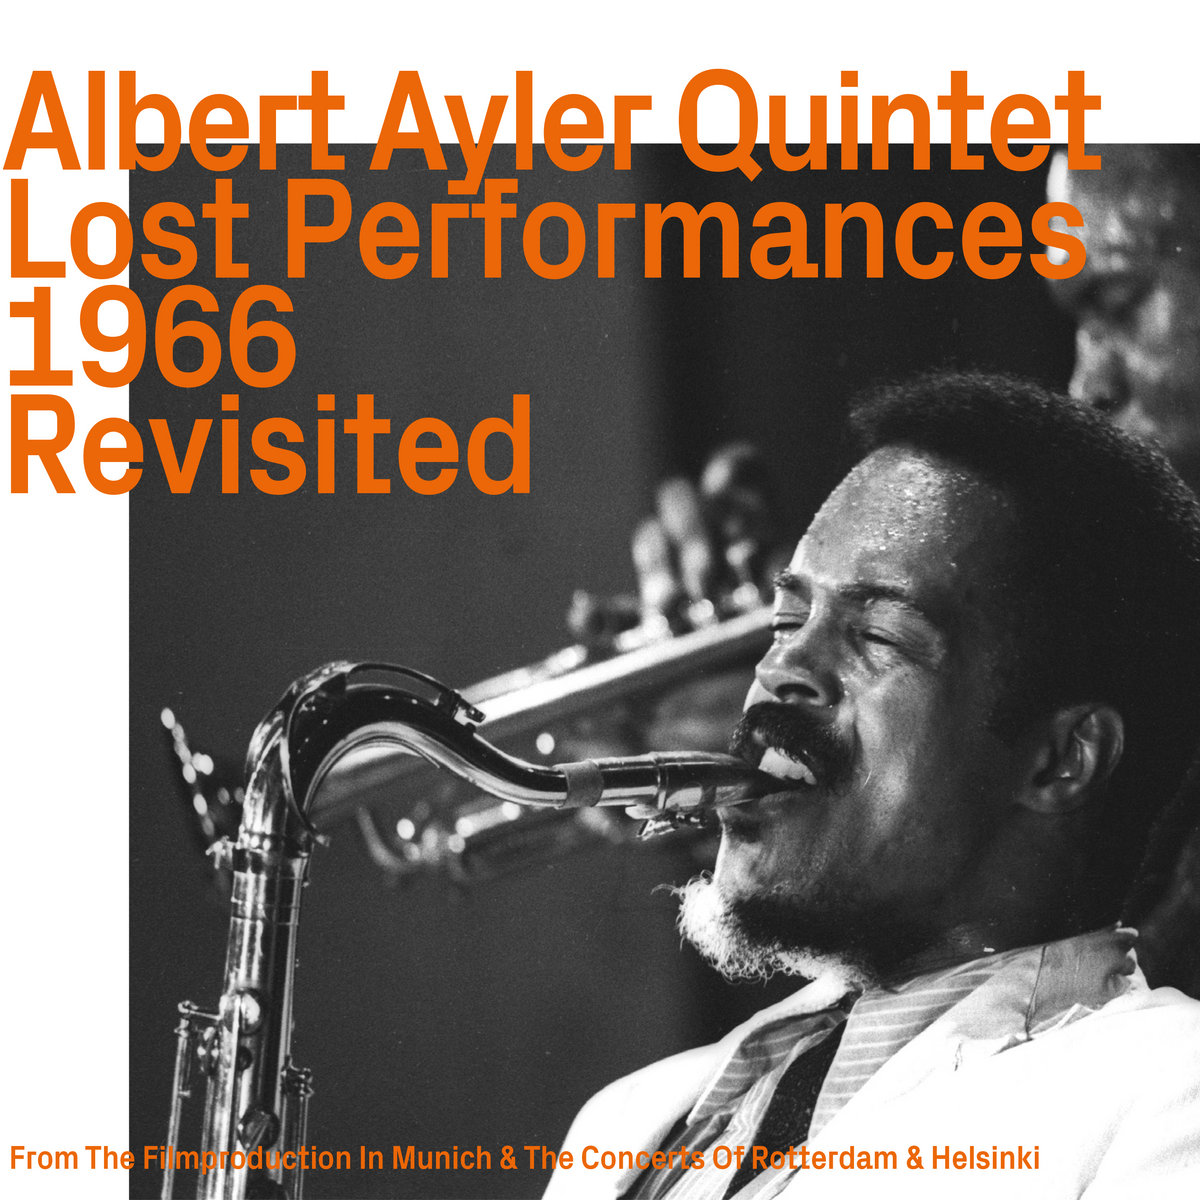 Albert Ayler Quintet, Lost Performances 1966 Revisited